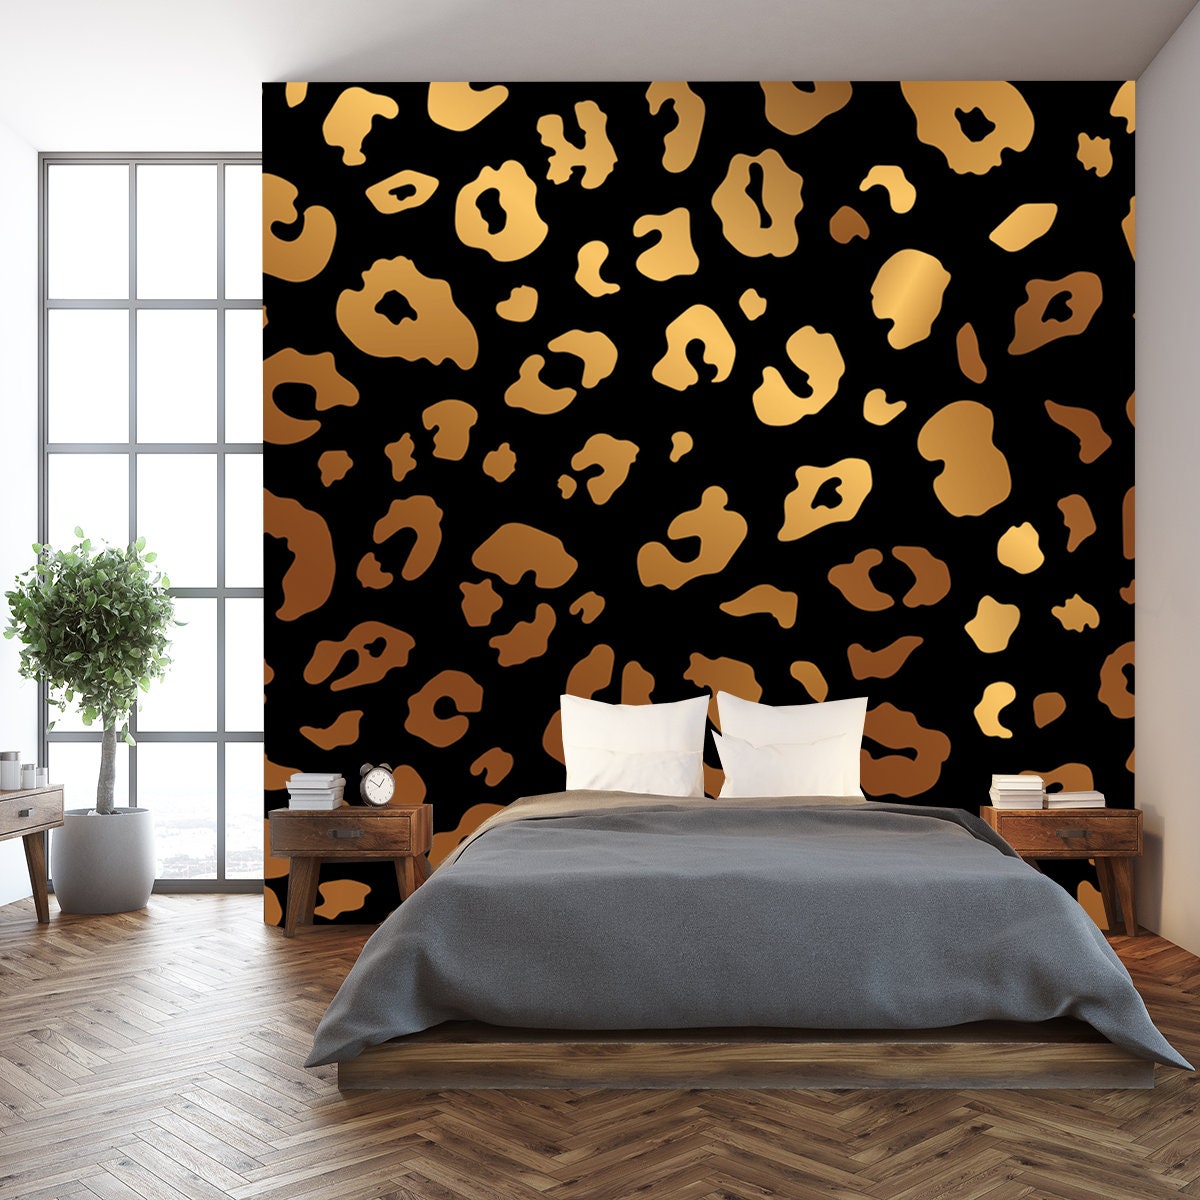 Trendy Bronze Leopard Abstract Pattern. Wild Animal Cheetah Skin Gold Metallic Texture on Black Background Wallpaper Bedroom Mural